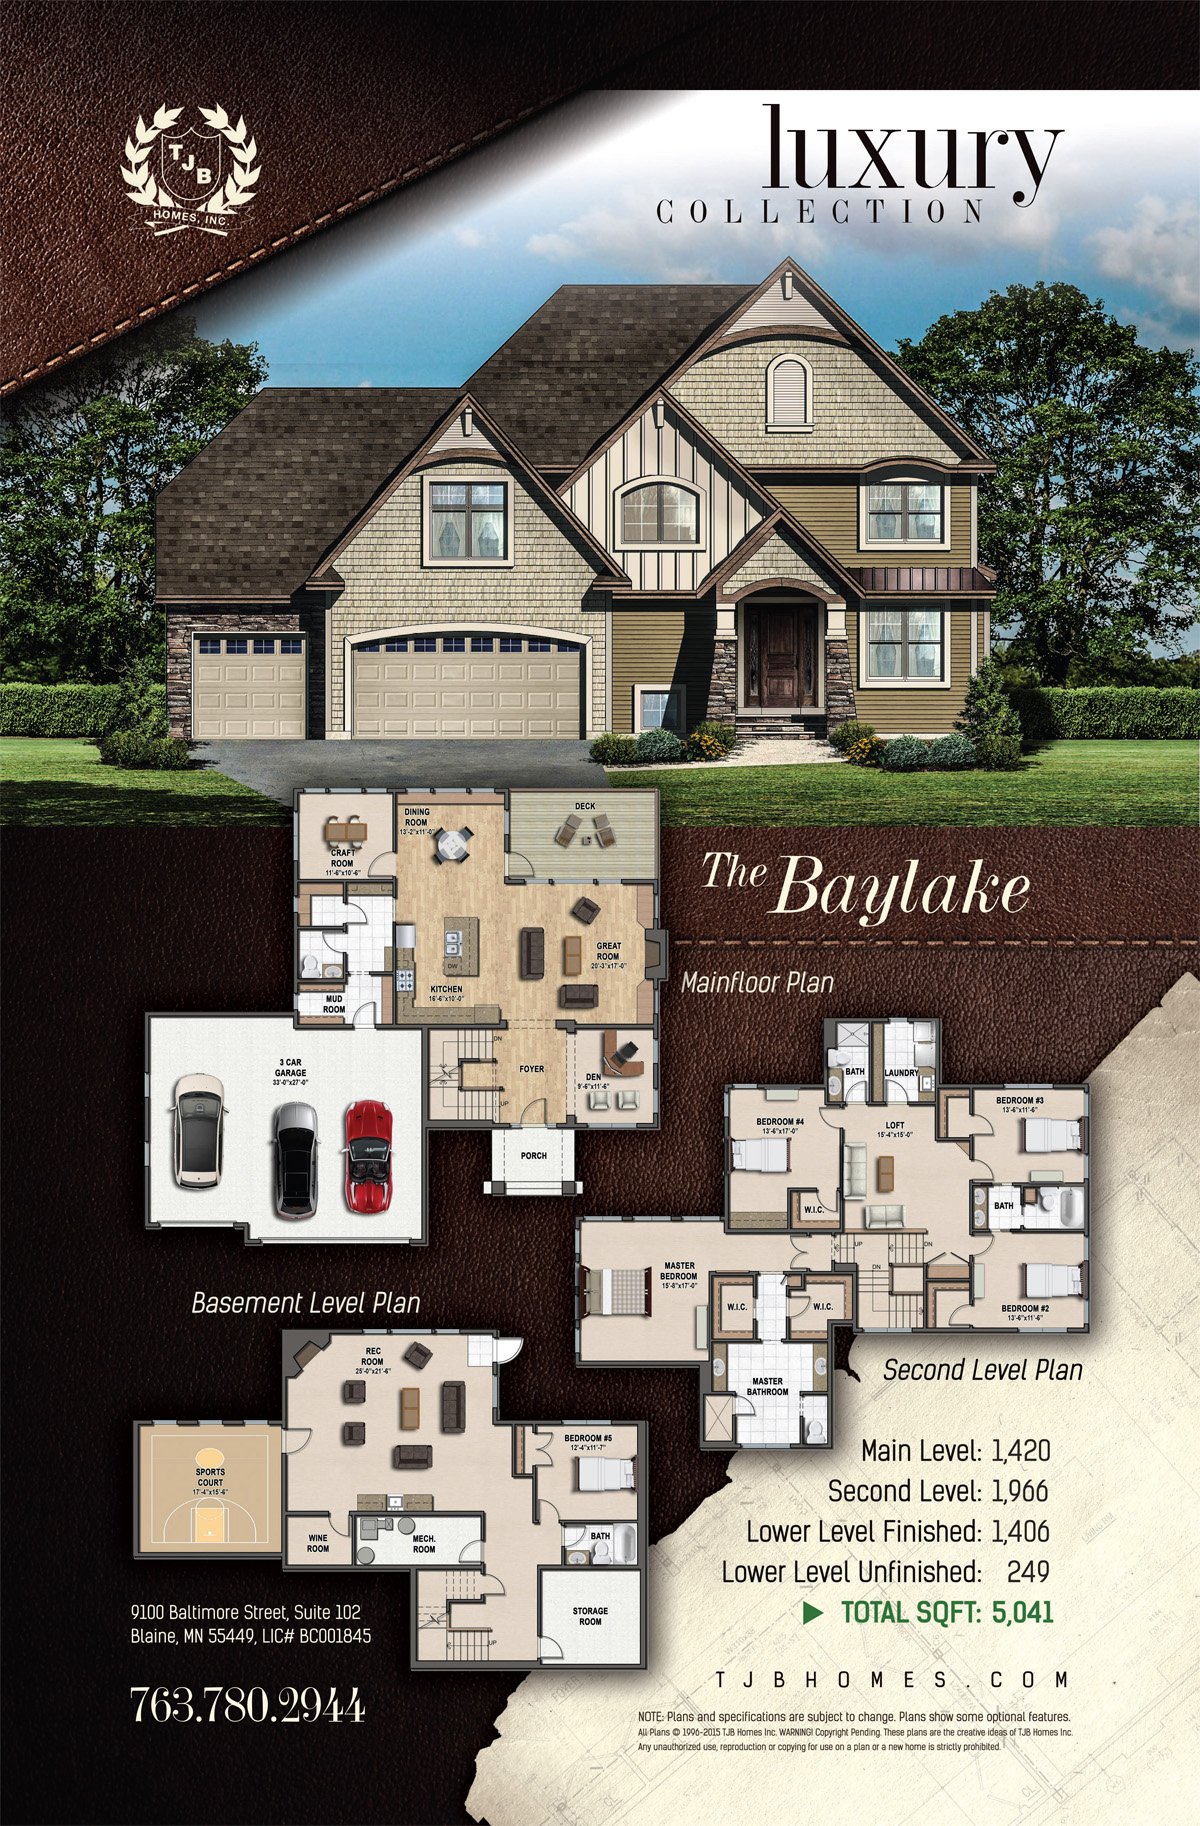 The Baylake Home Plan